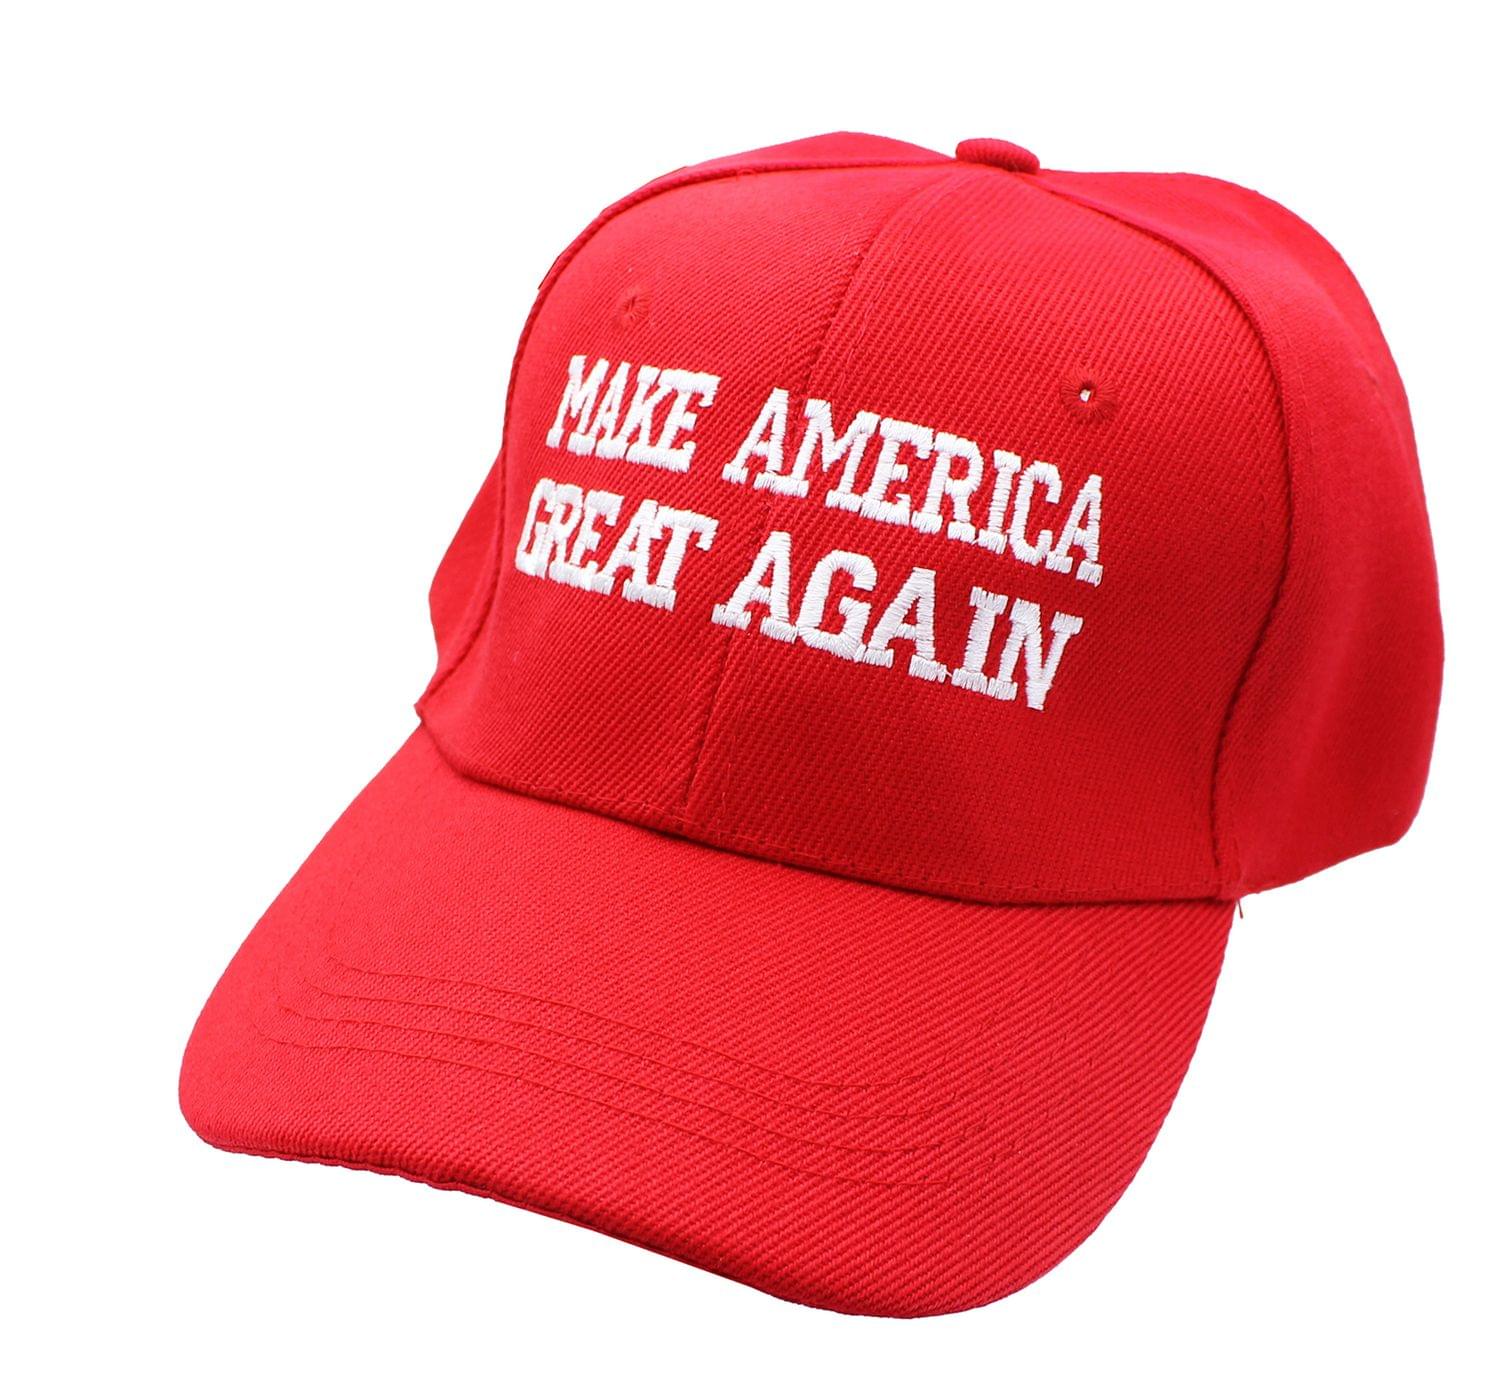 Donald Trump 2016 "Make America Great Again" Red Hat